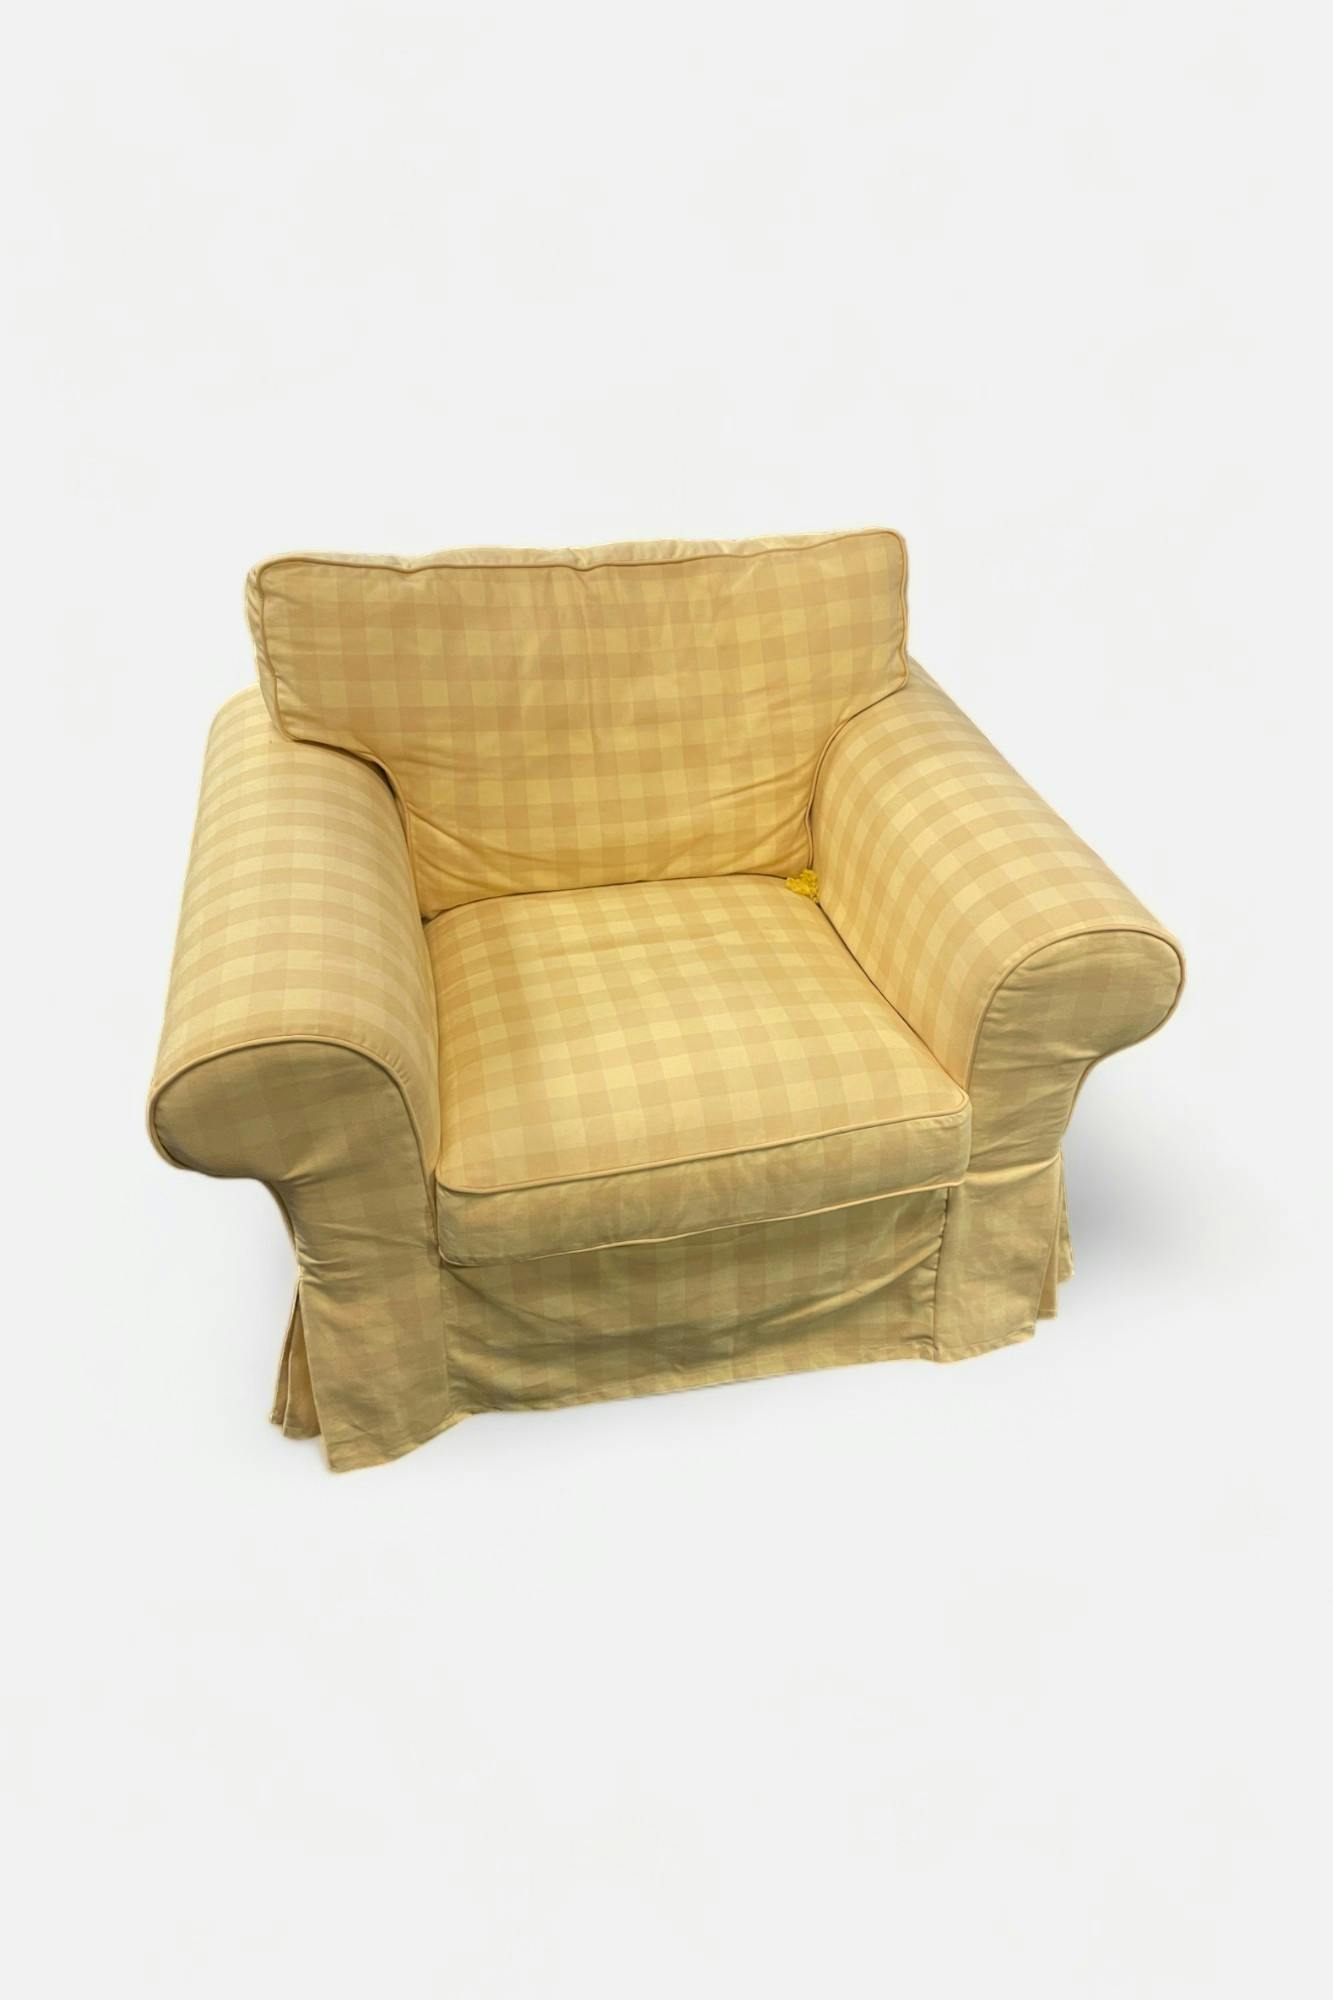 Ikea Yellow sofa 1 person - Relieve Furniture